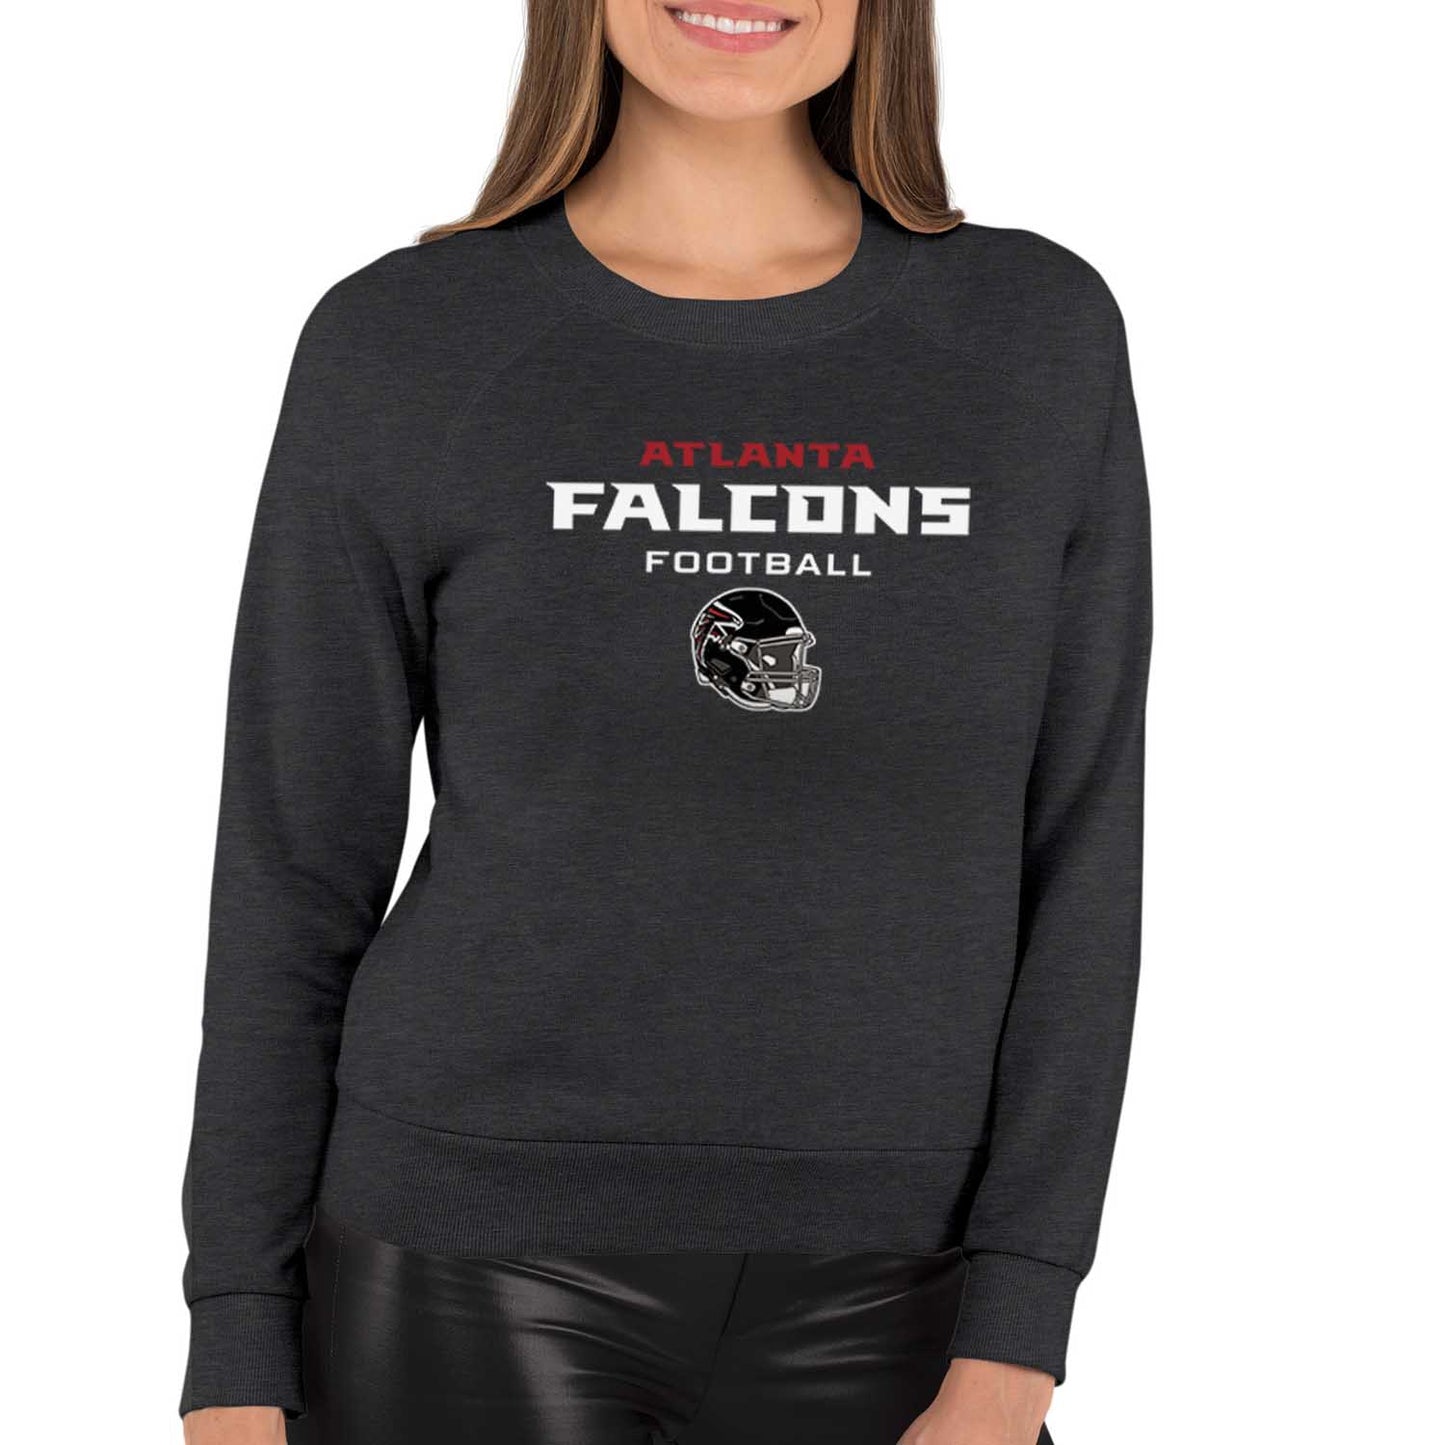 Atlanta Falcons Women's NFL Football Helmet Charcoal Slouchy Crewneck -Tagless Lightweight Pullover - Charcoal